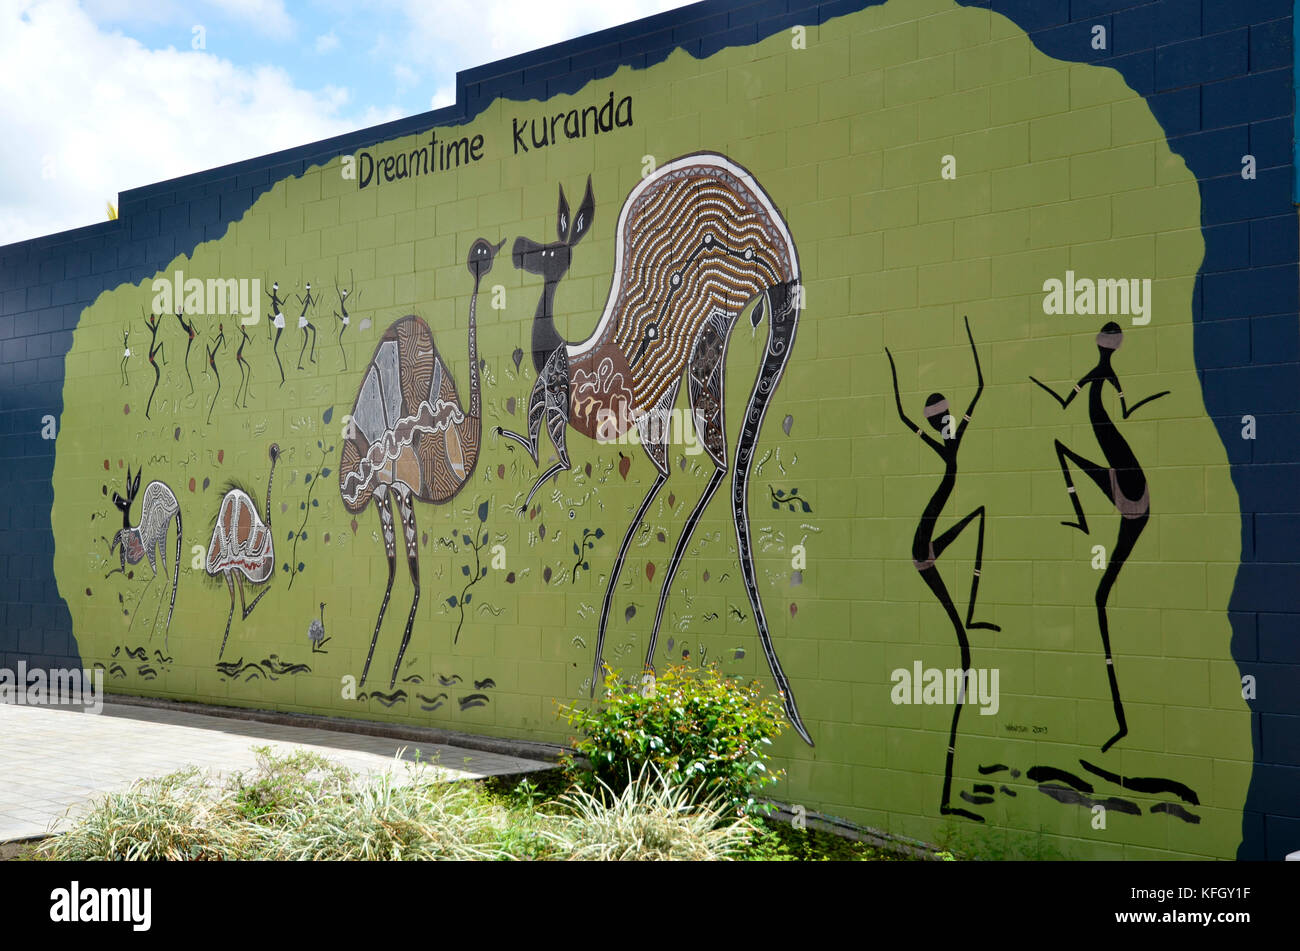 Aboriginal Art on a wall in Kuranda, northern Queensland, Australia Stock Photo